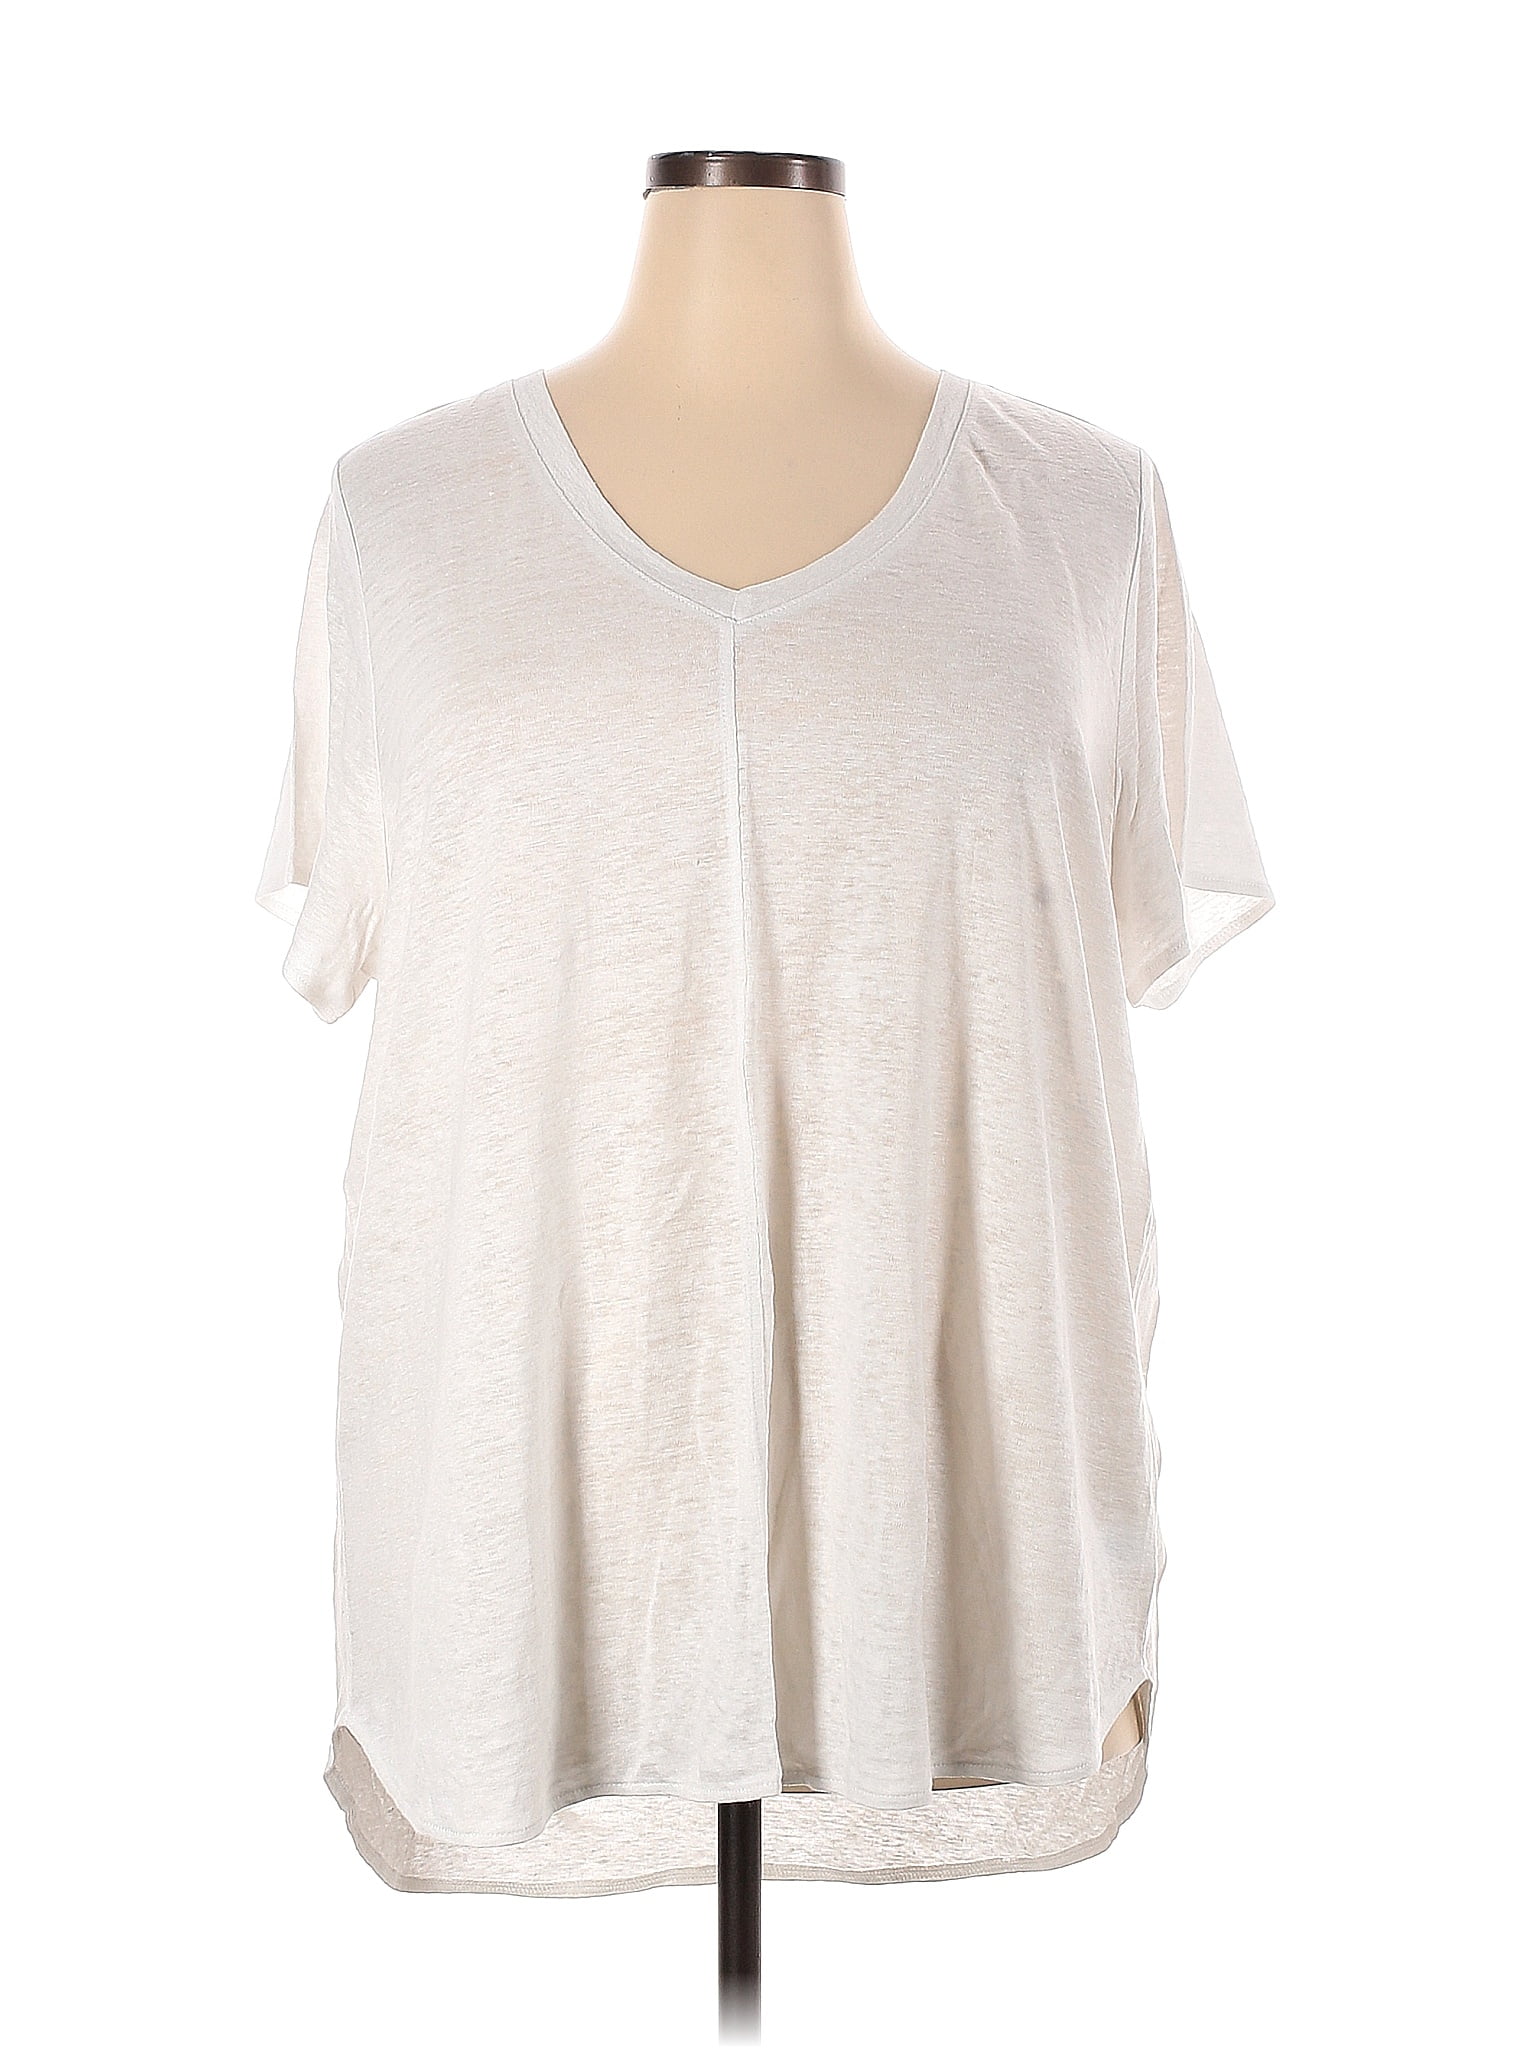 Tahari 100% Linen White Ivory Short Sleeve T-Shirt Size 2X (Plus) - 70% ...